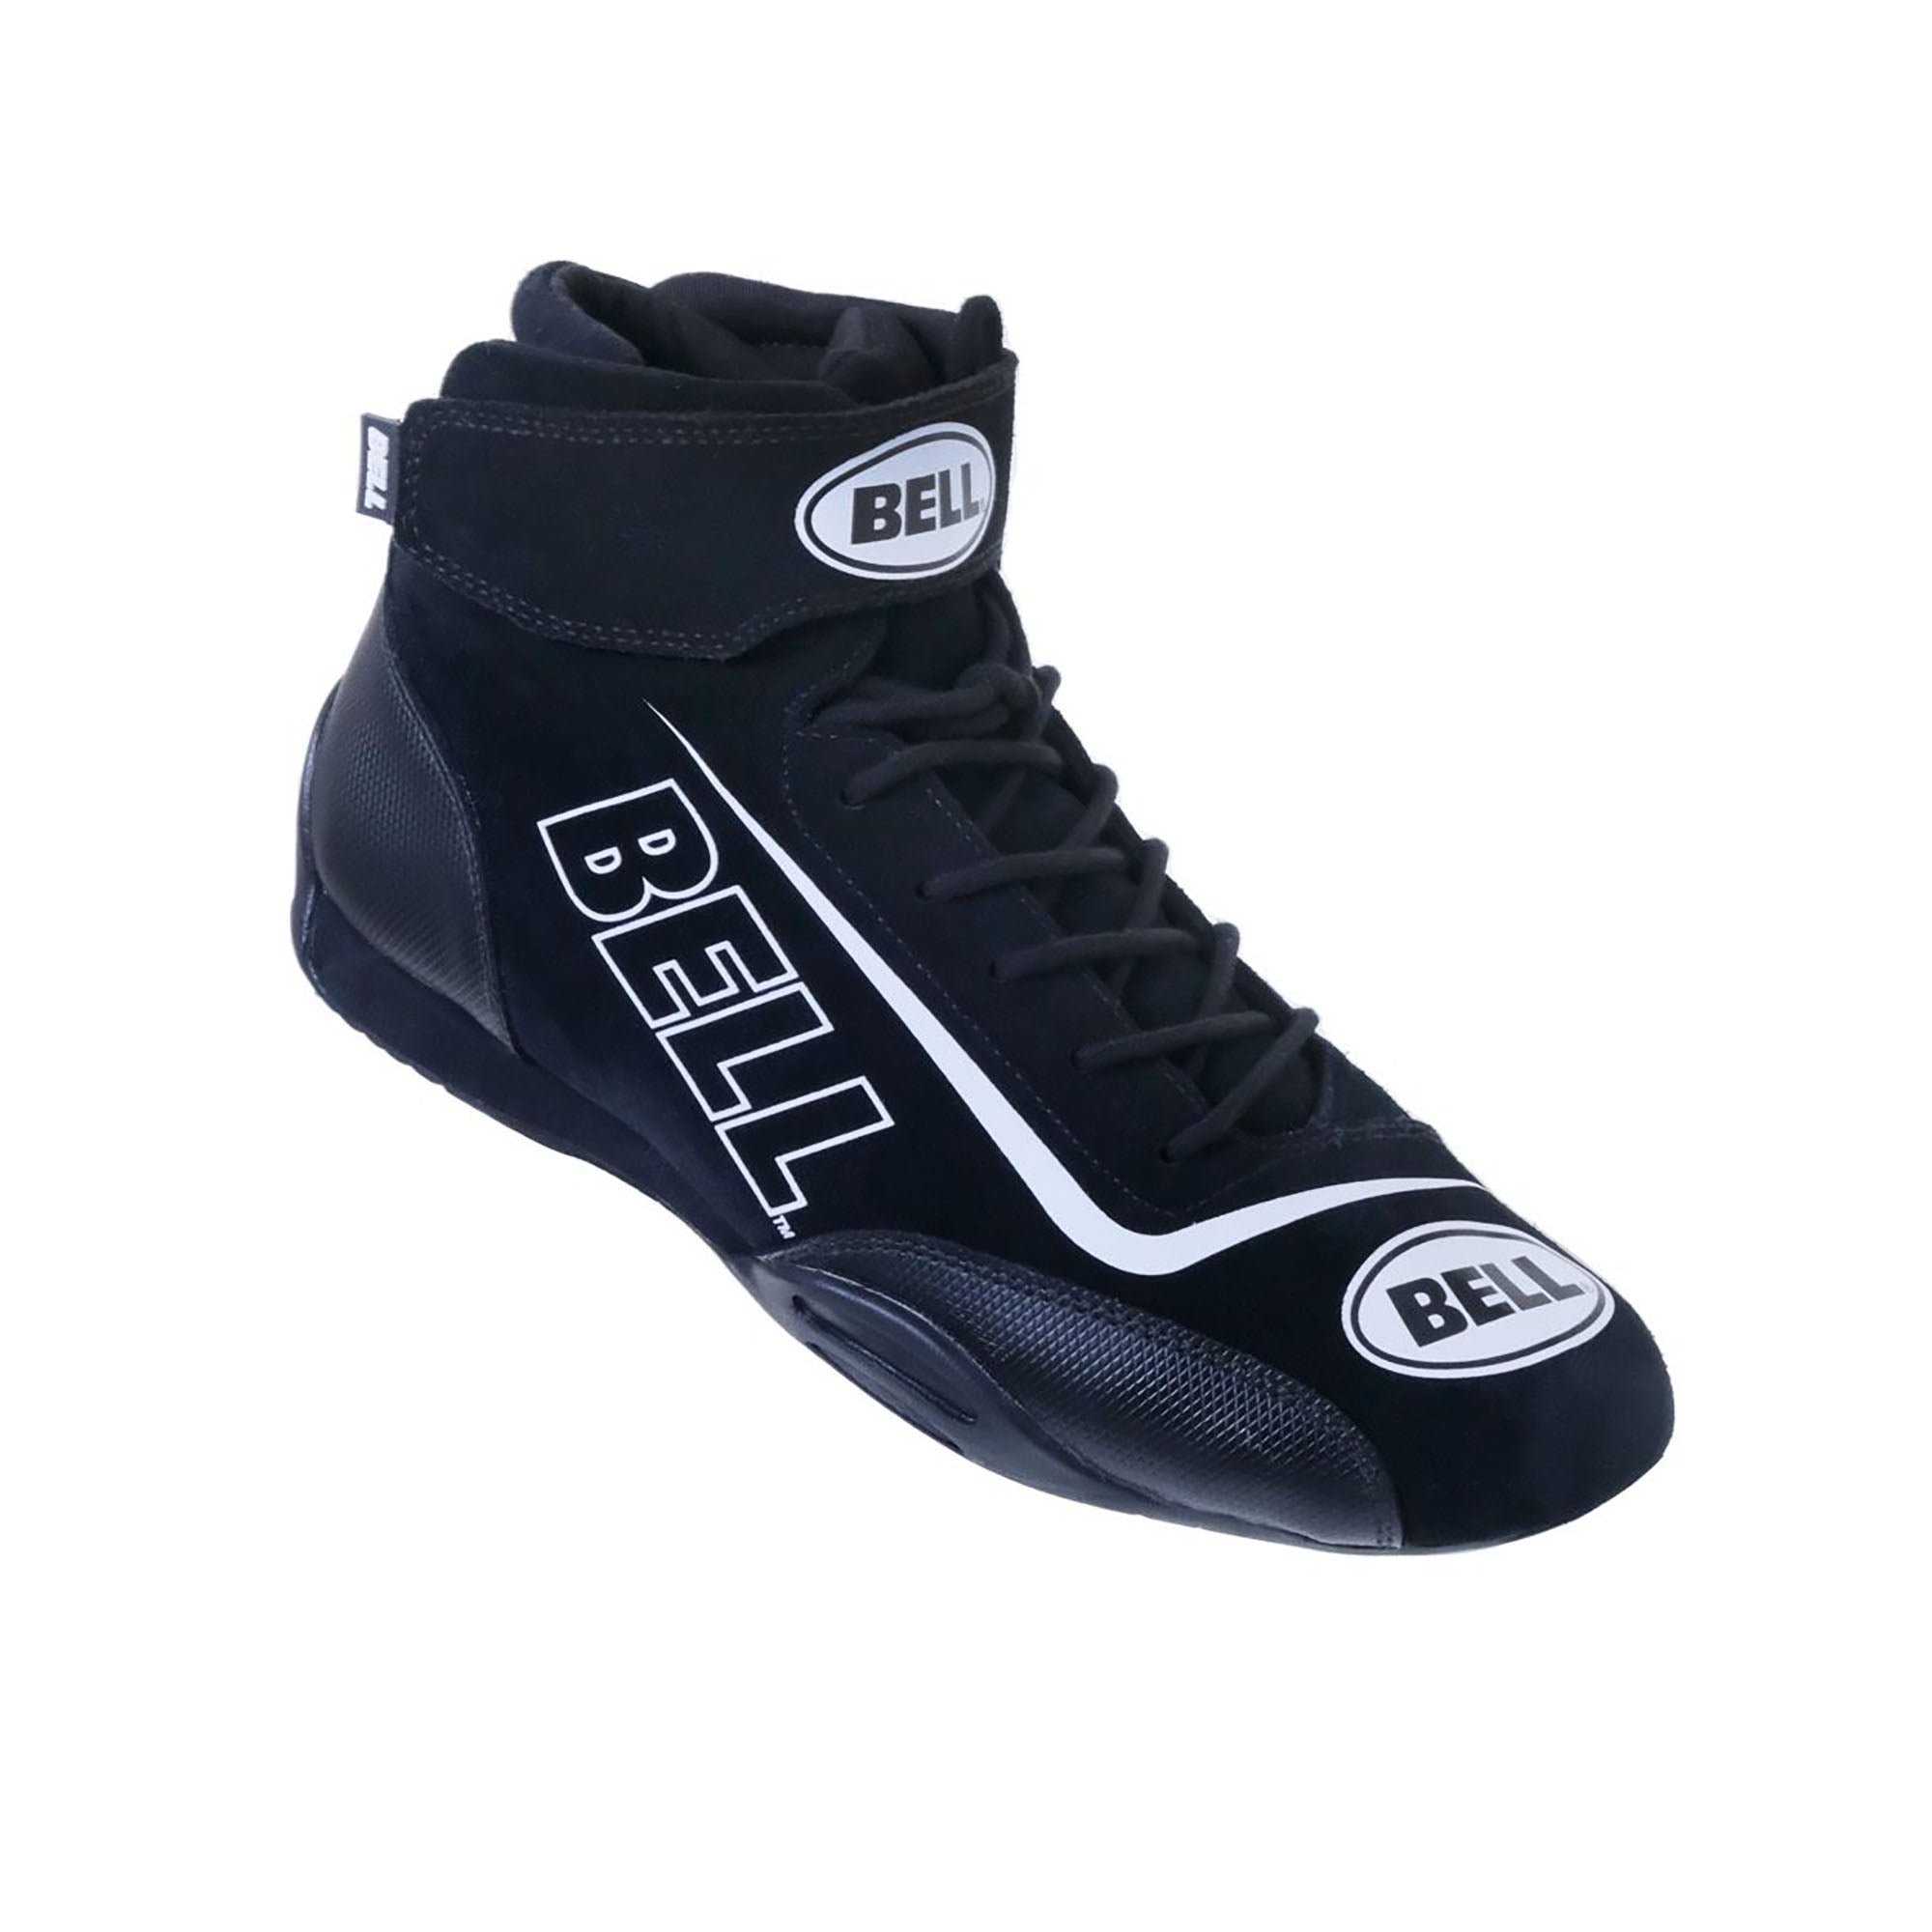 Bell Sport-TX Racing Shoes